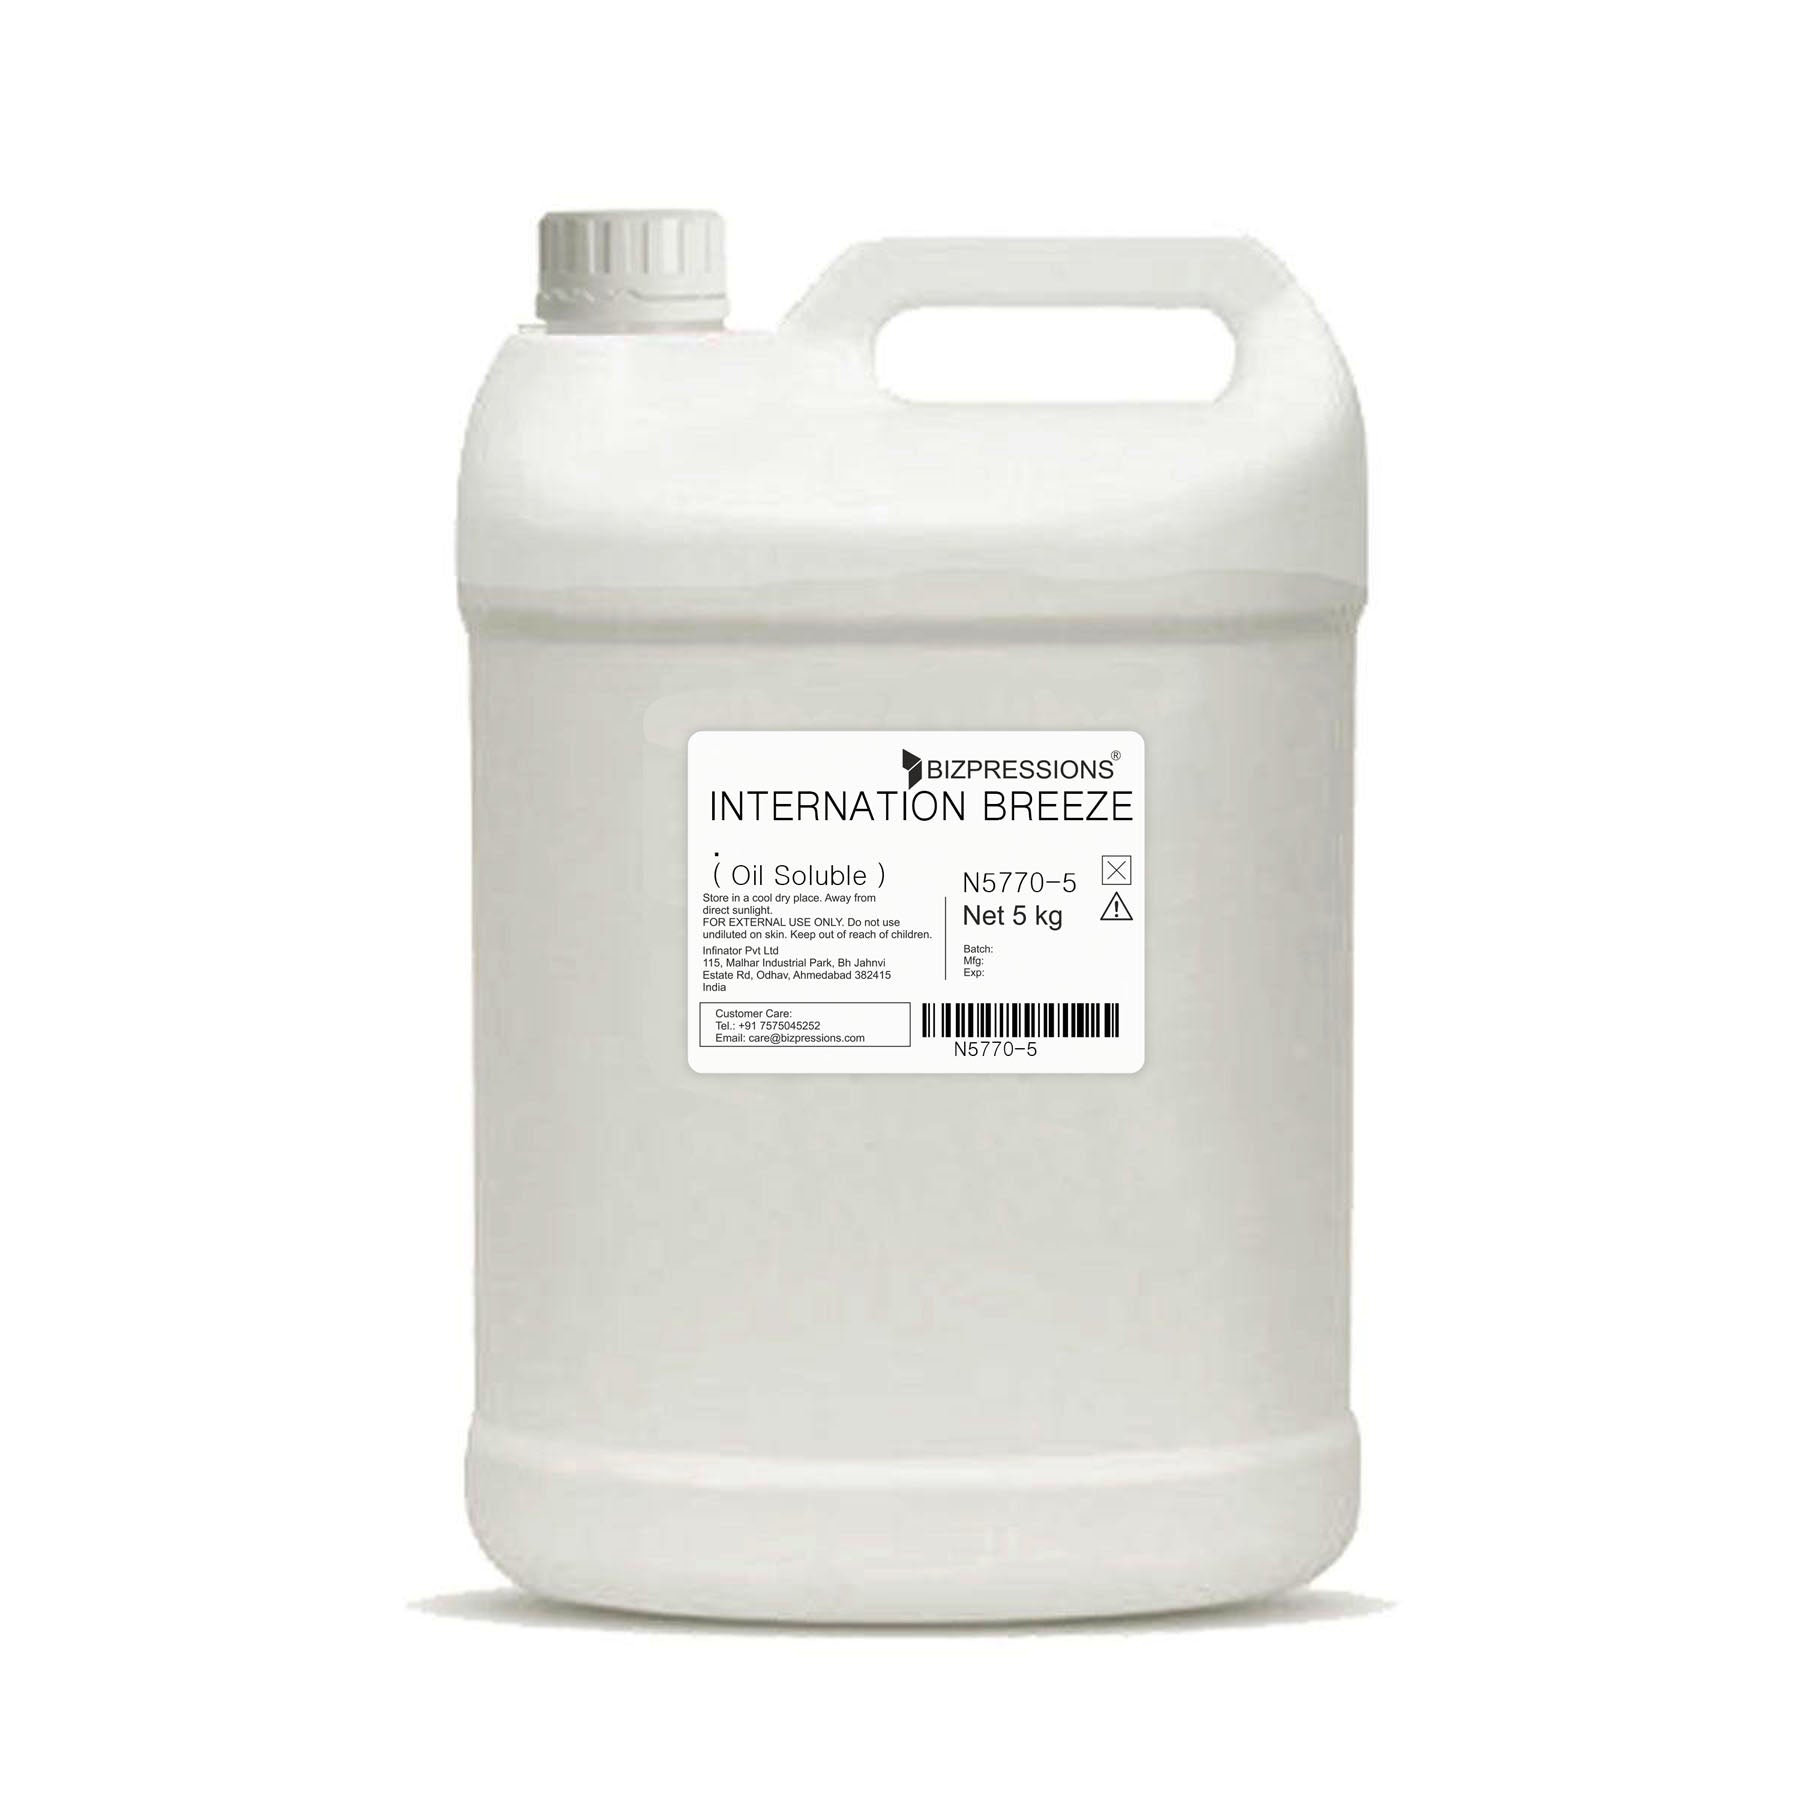 INTERNATIONAL BREEZE - Fragrance ( Oil Soluble ) - 5 kg